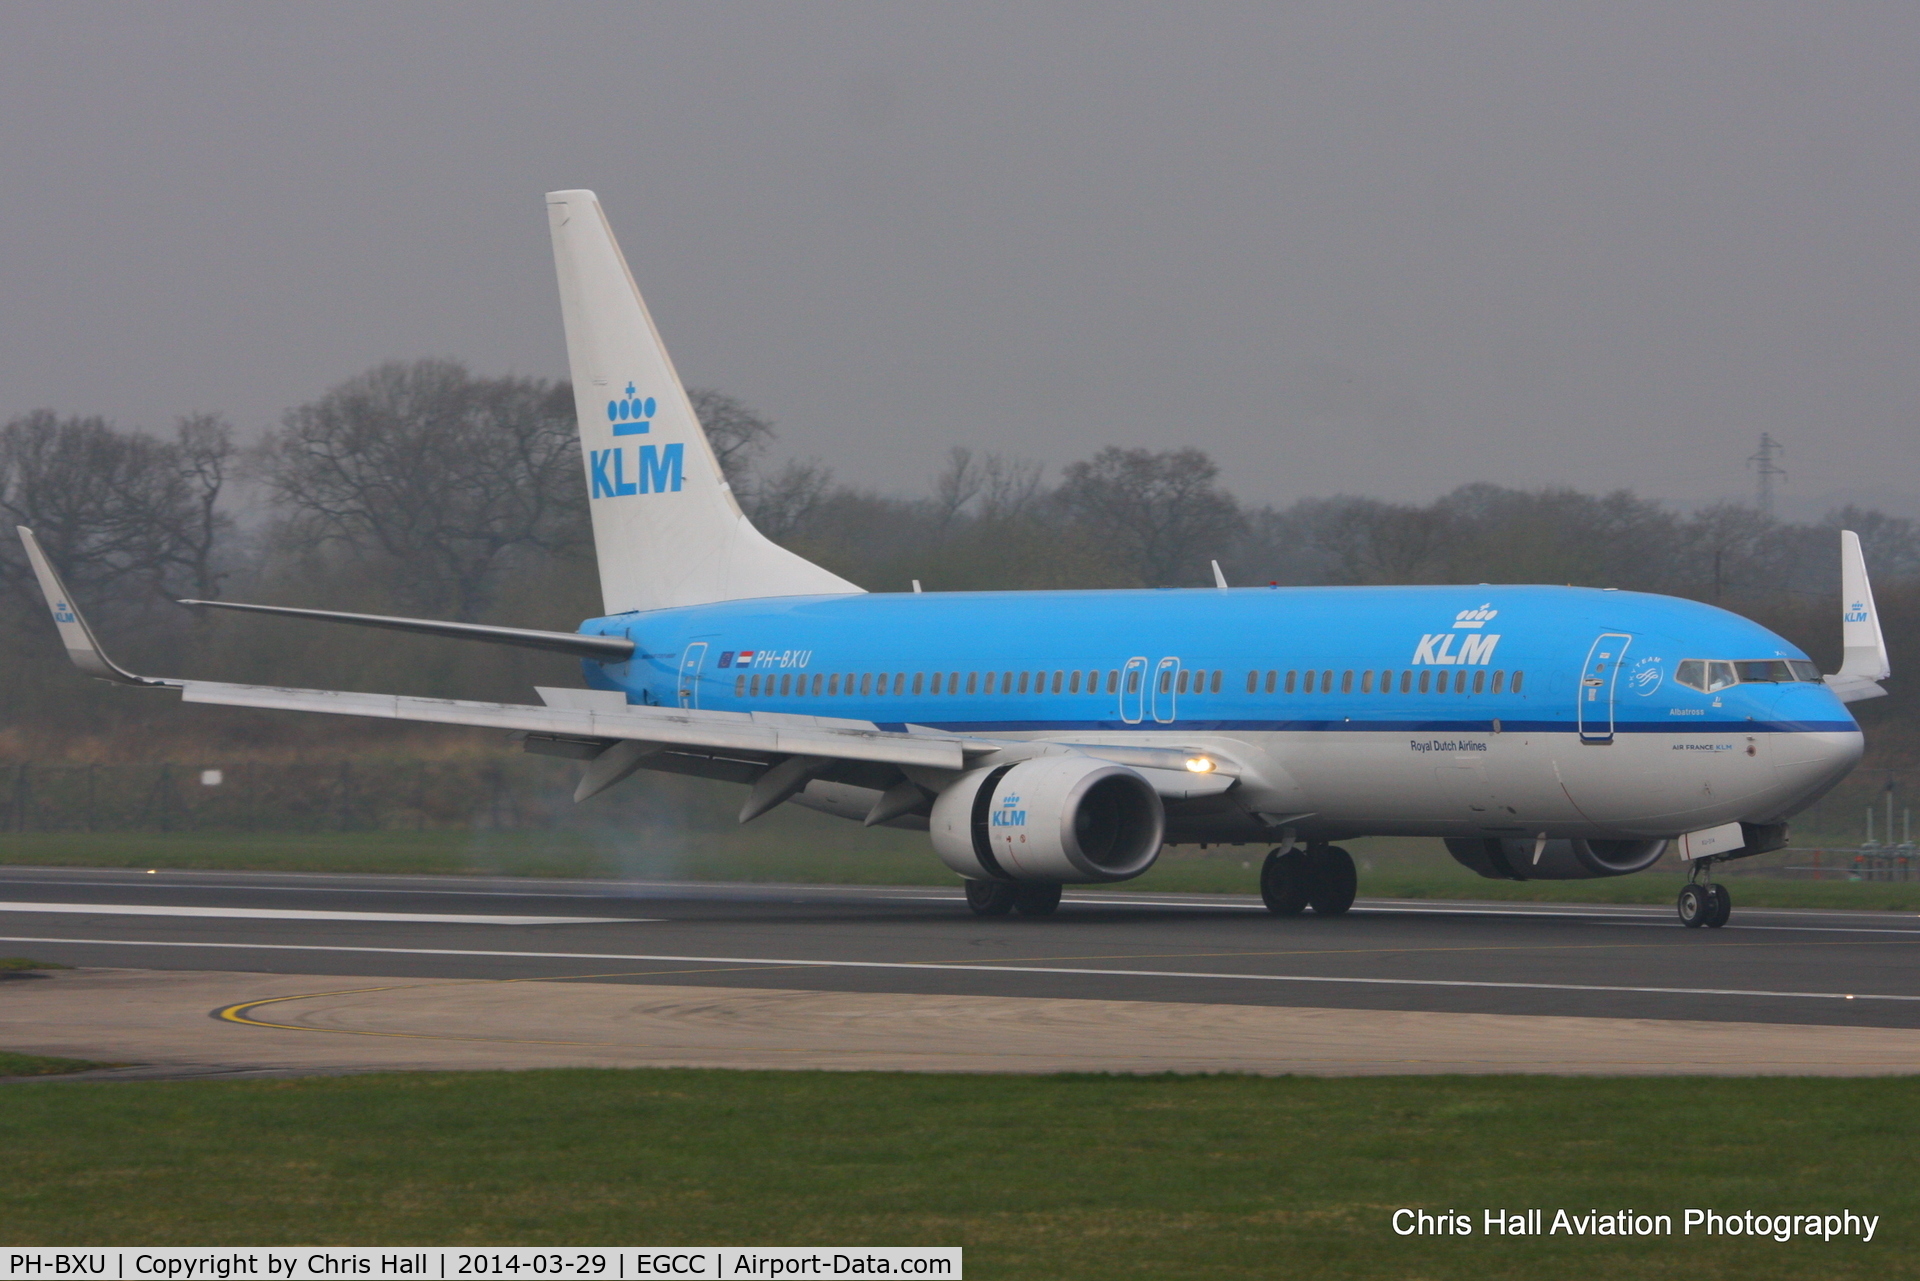 PH-BXU, 2006 Boeing 737-8BK C/N 33028, KLM Royal Dutch Airlines